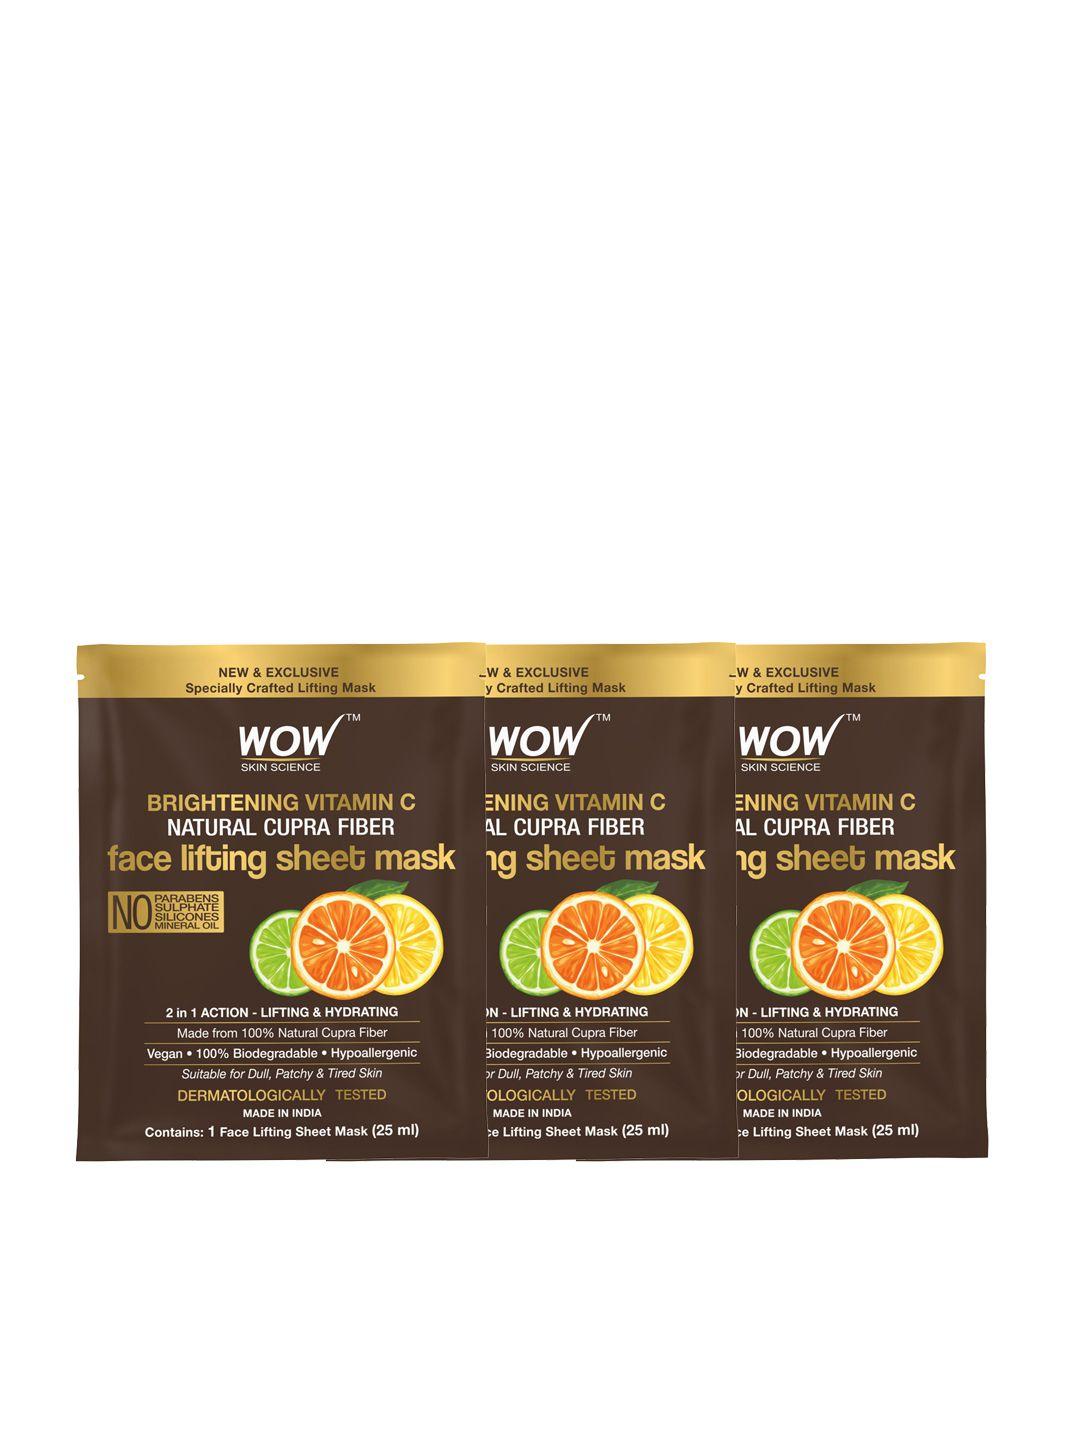 wow skin science set of 3 vitamin c natural fiber cupra face lifting sheet mask-25ml each